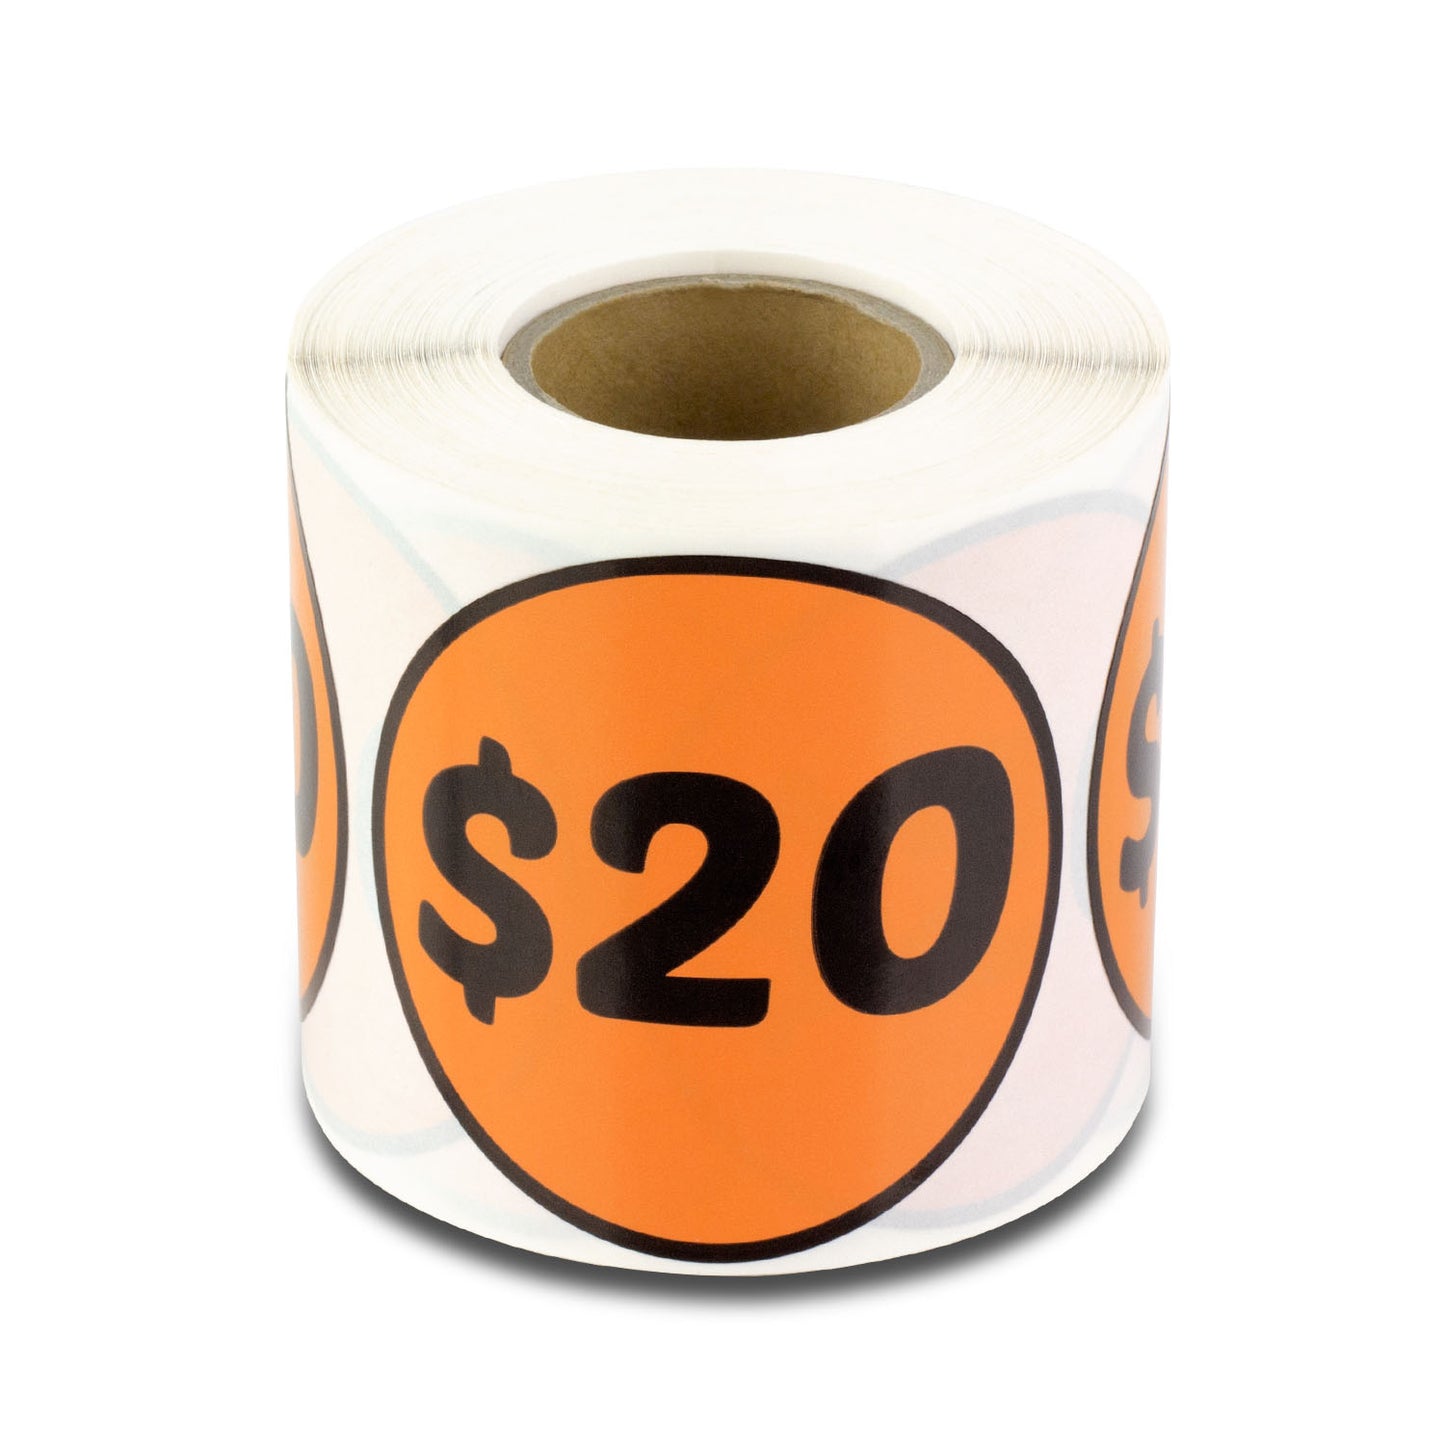 2 inch | Retail & Sales: 20 Dollar Stickers / $20 Dollar Price Stickers